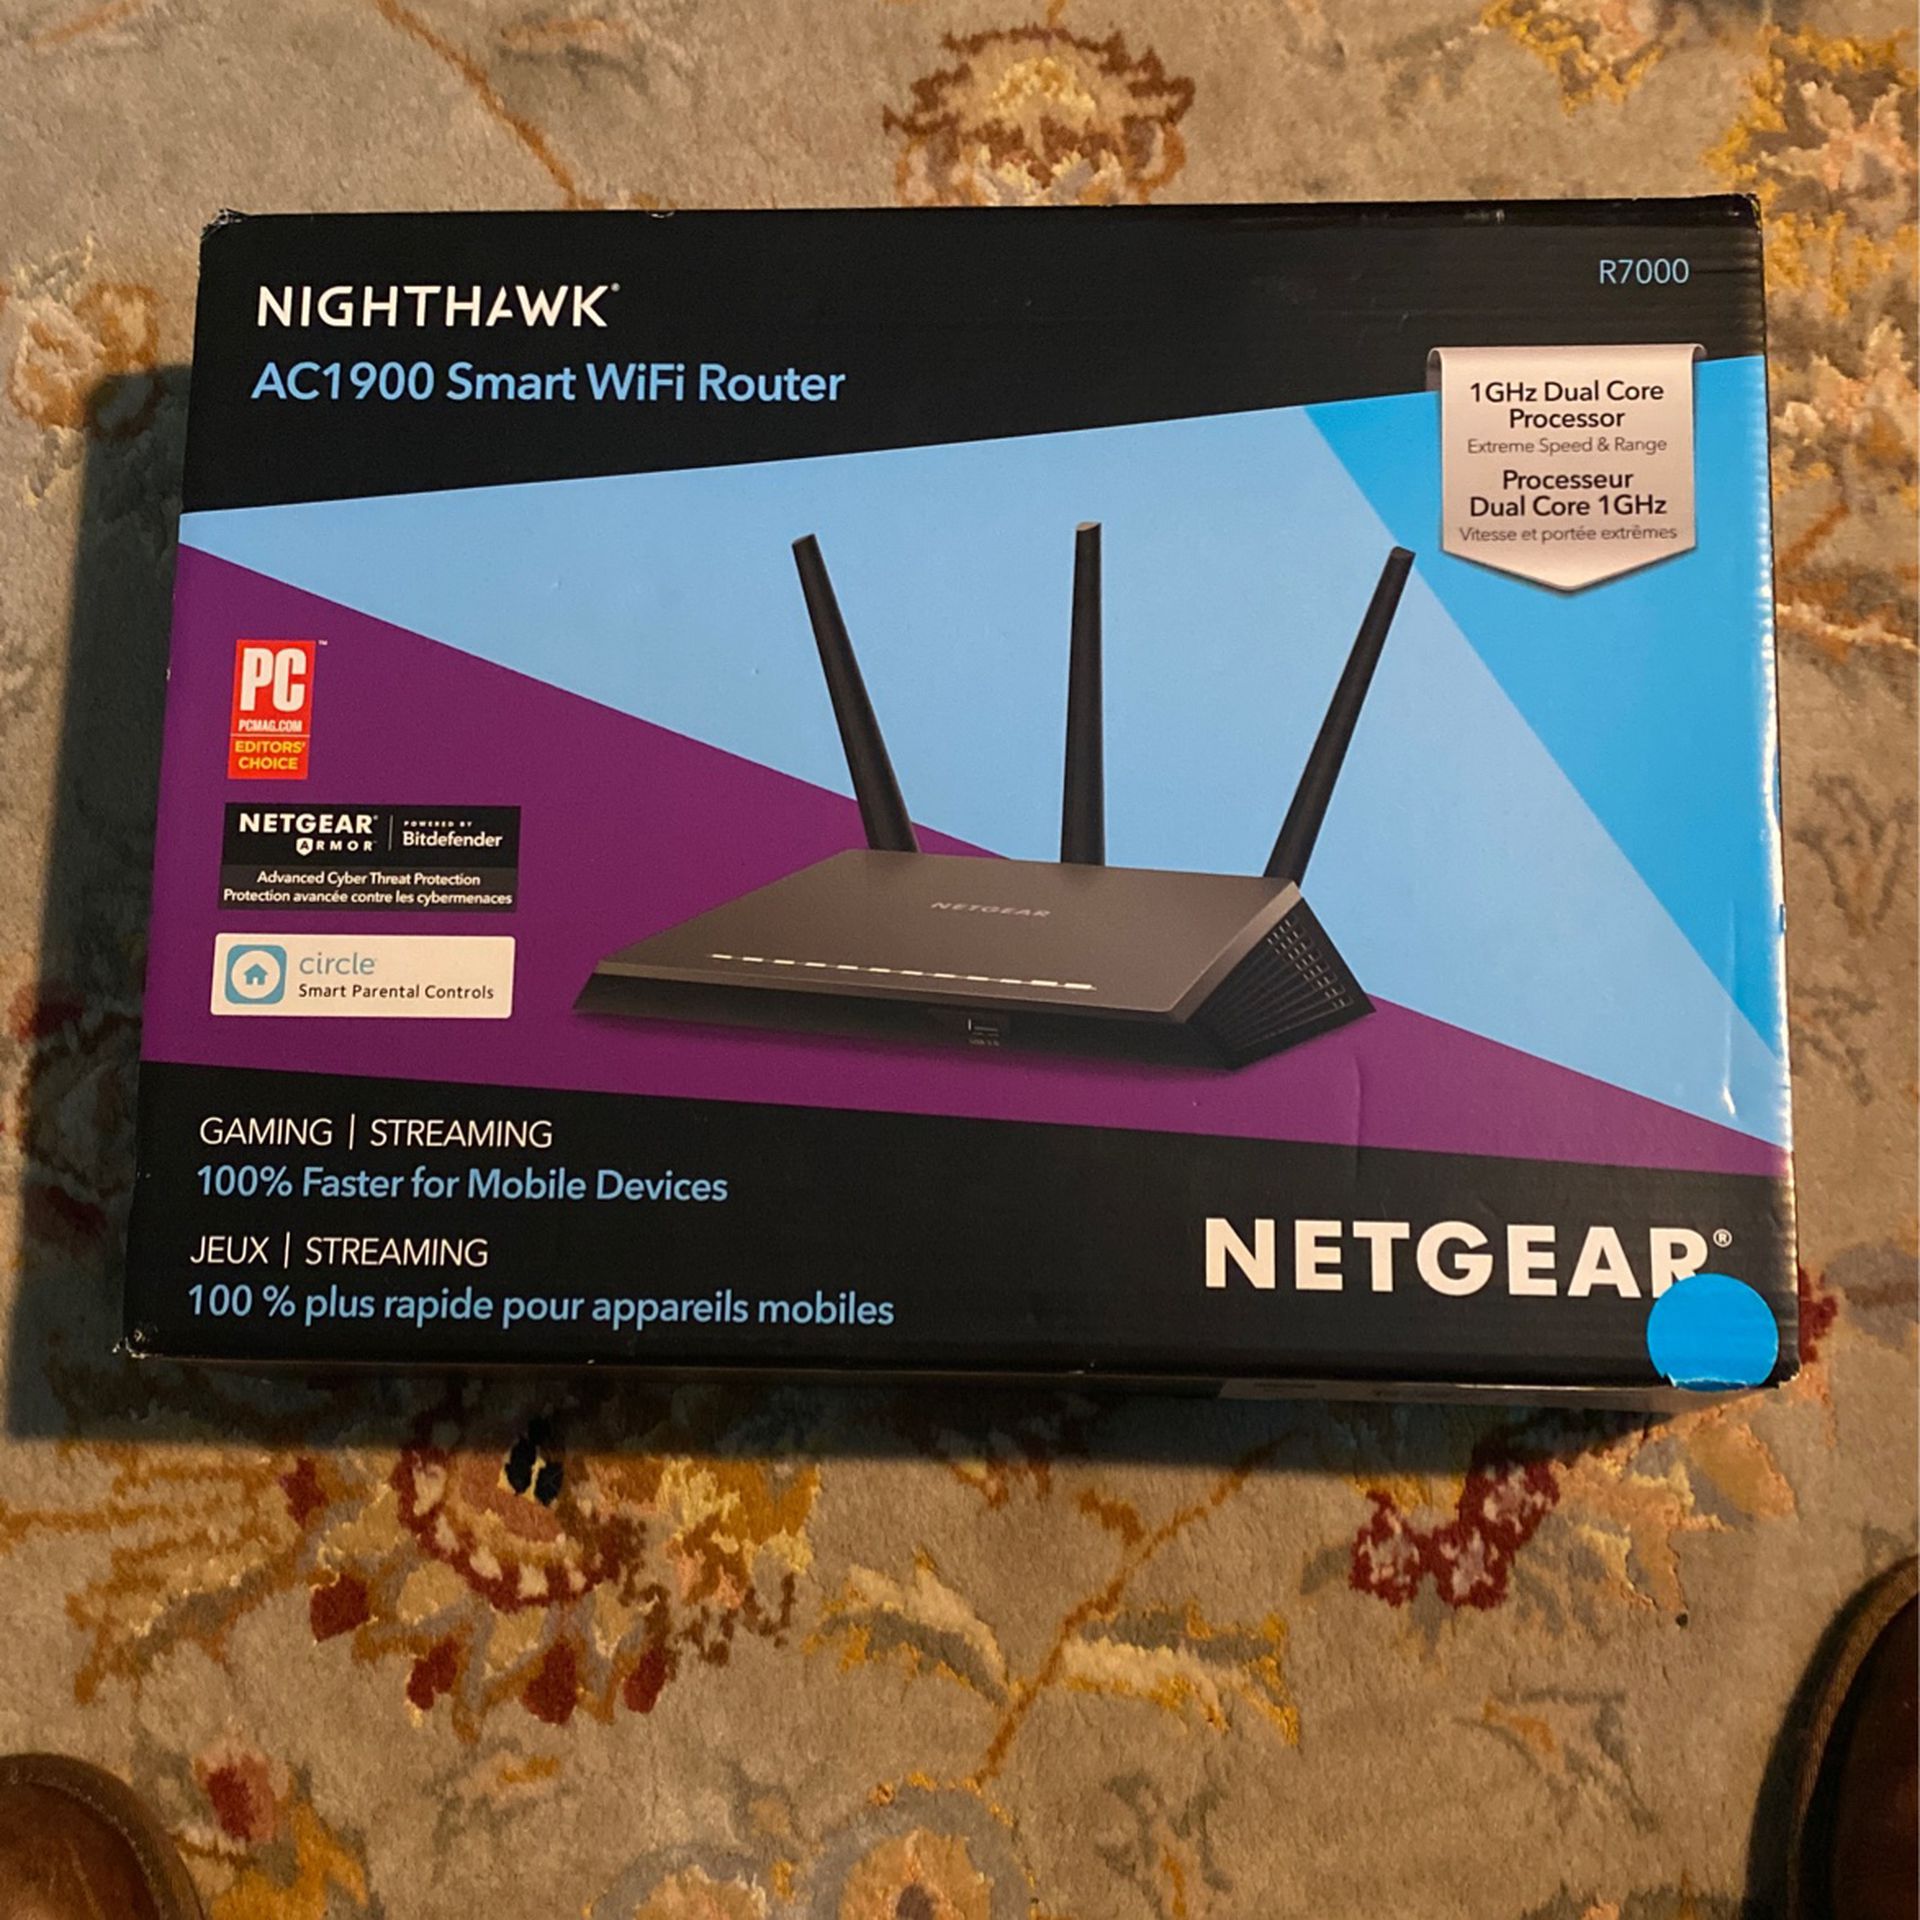 New Netgear Nighthawk AC1900 smart WiFi router